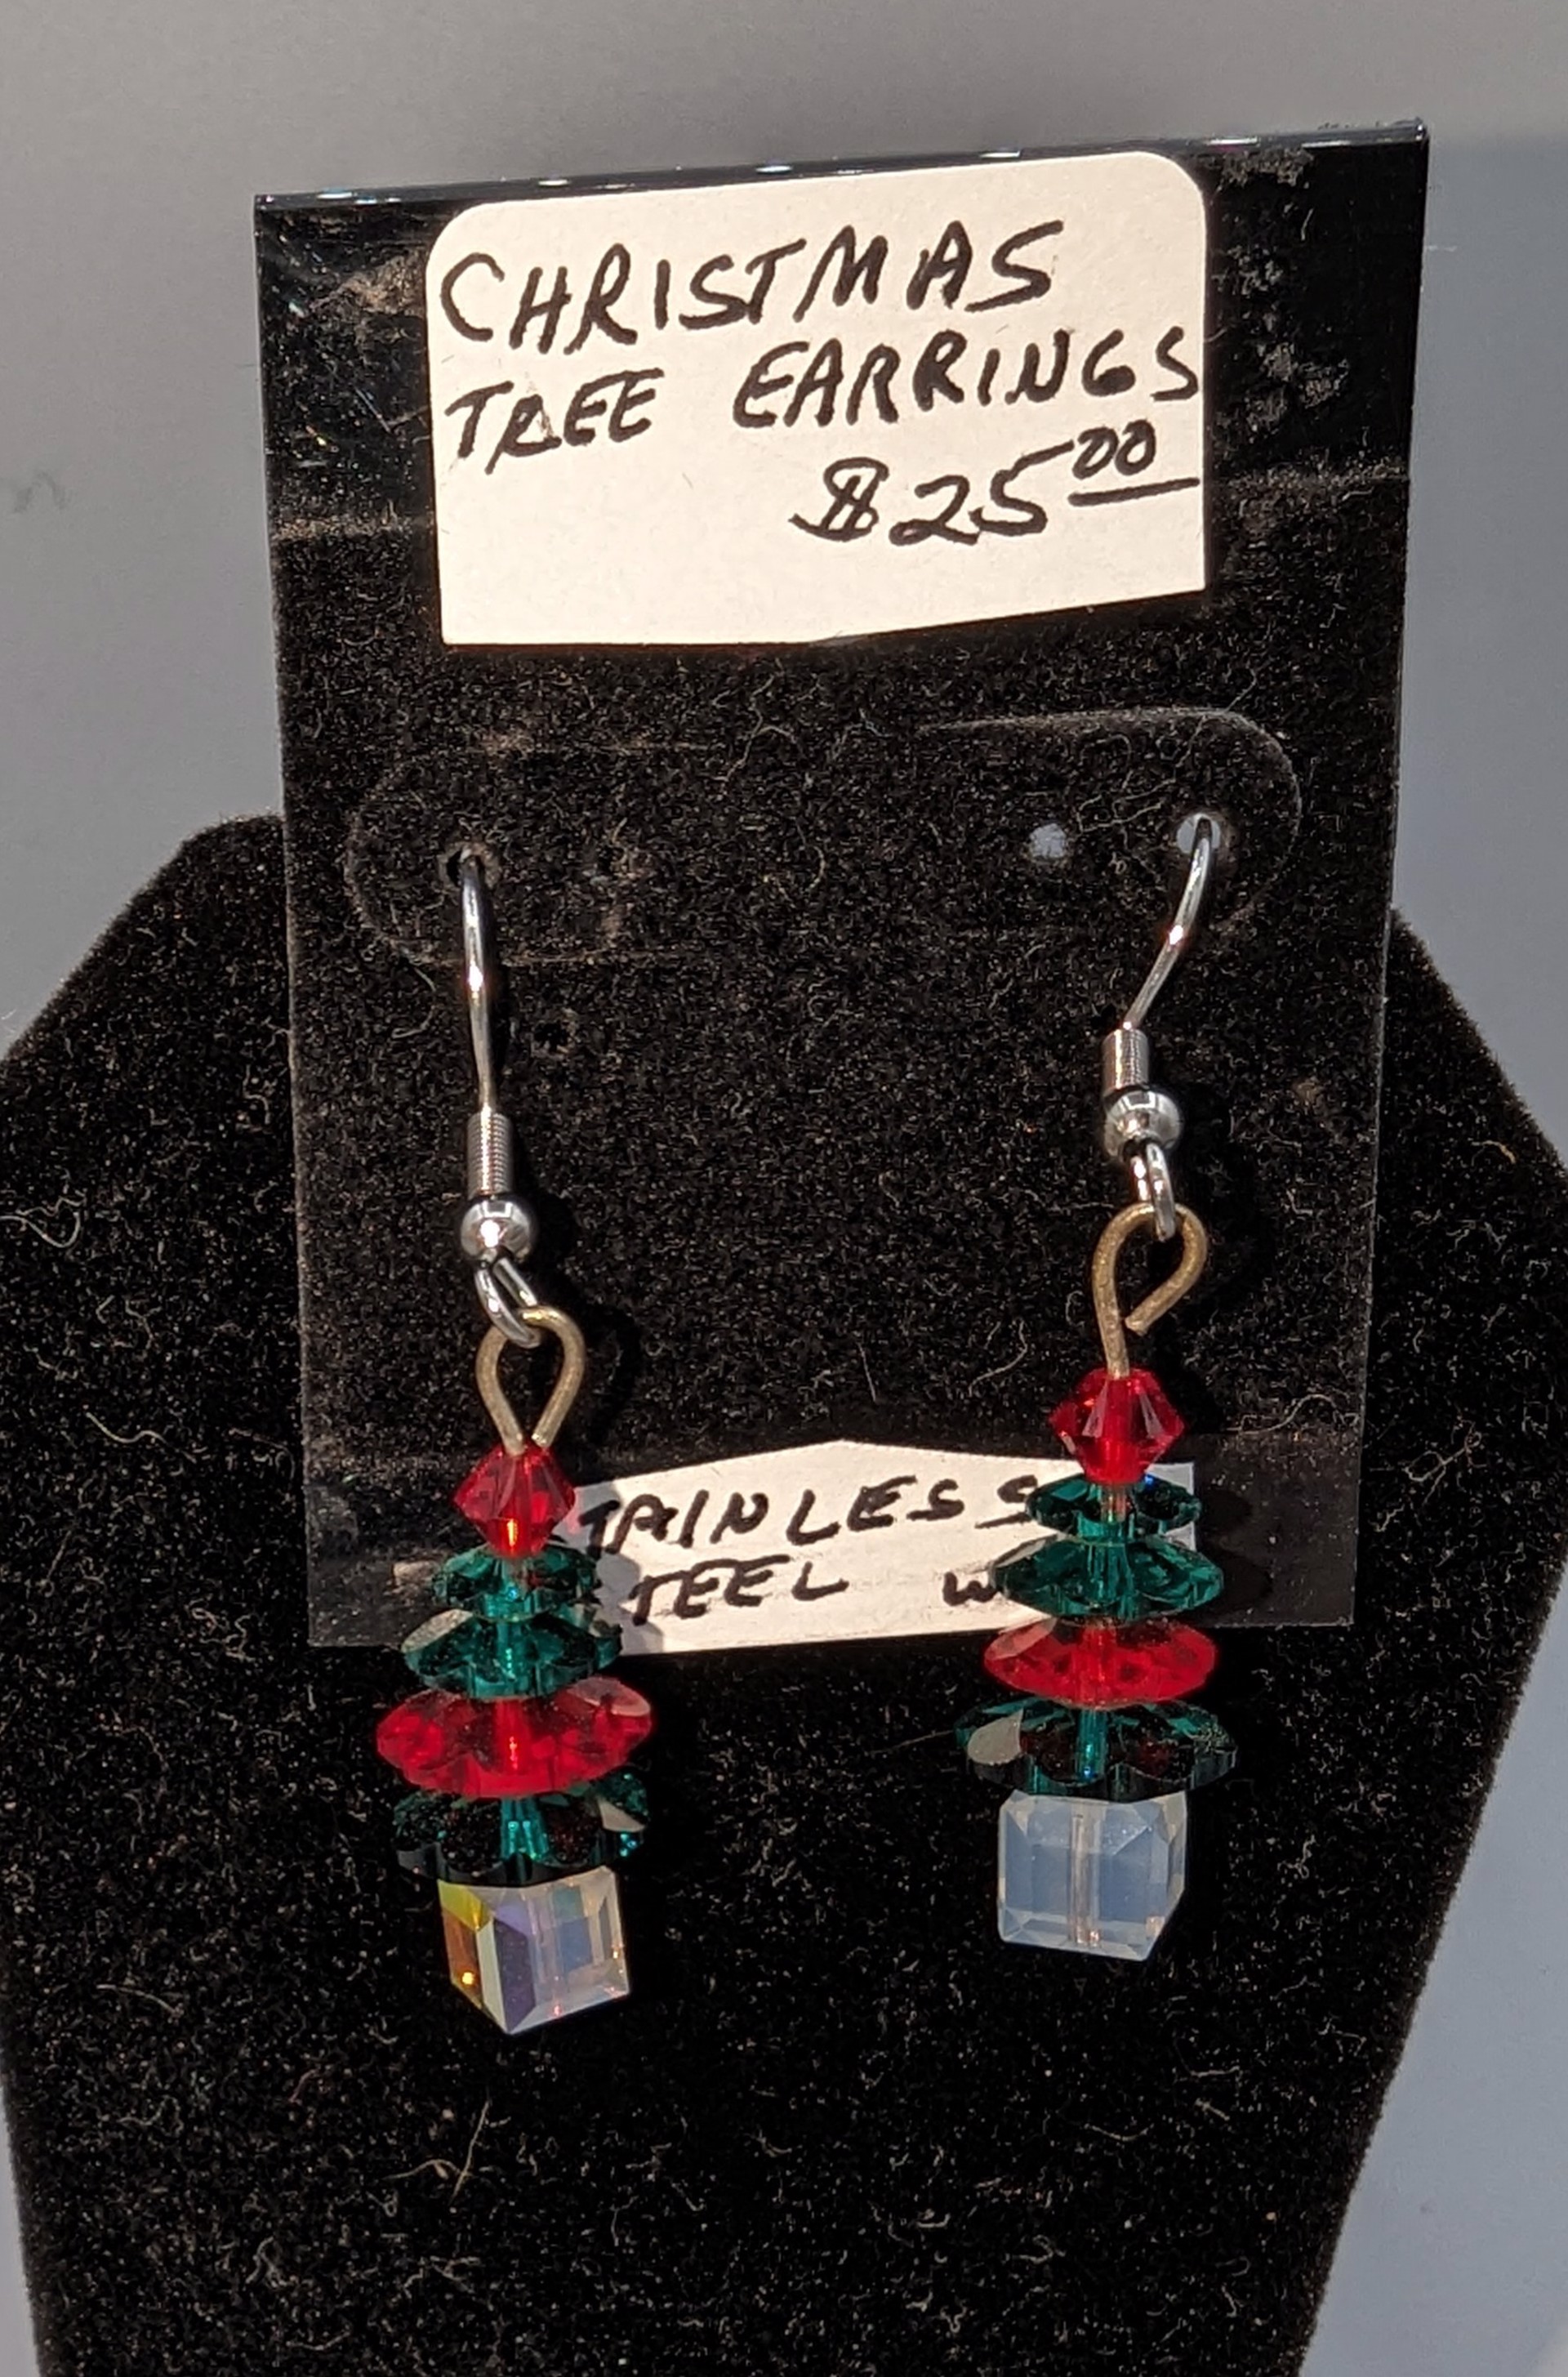 Christmas tree earrings by Betty Binder